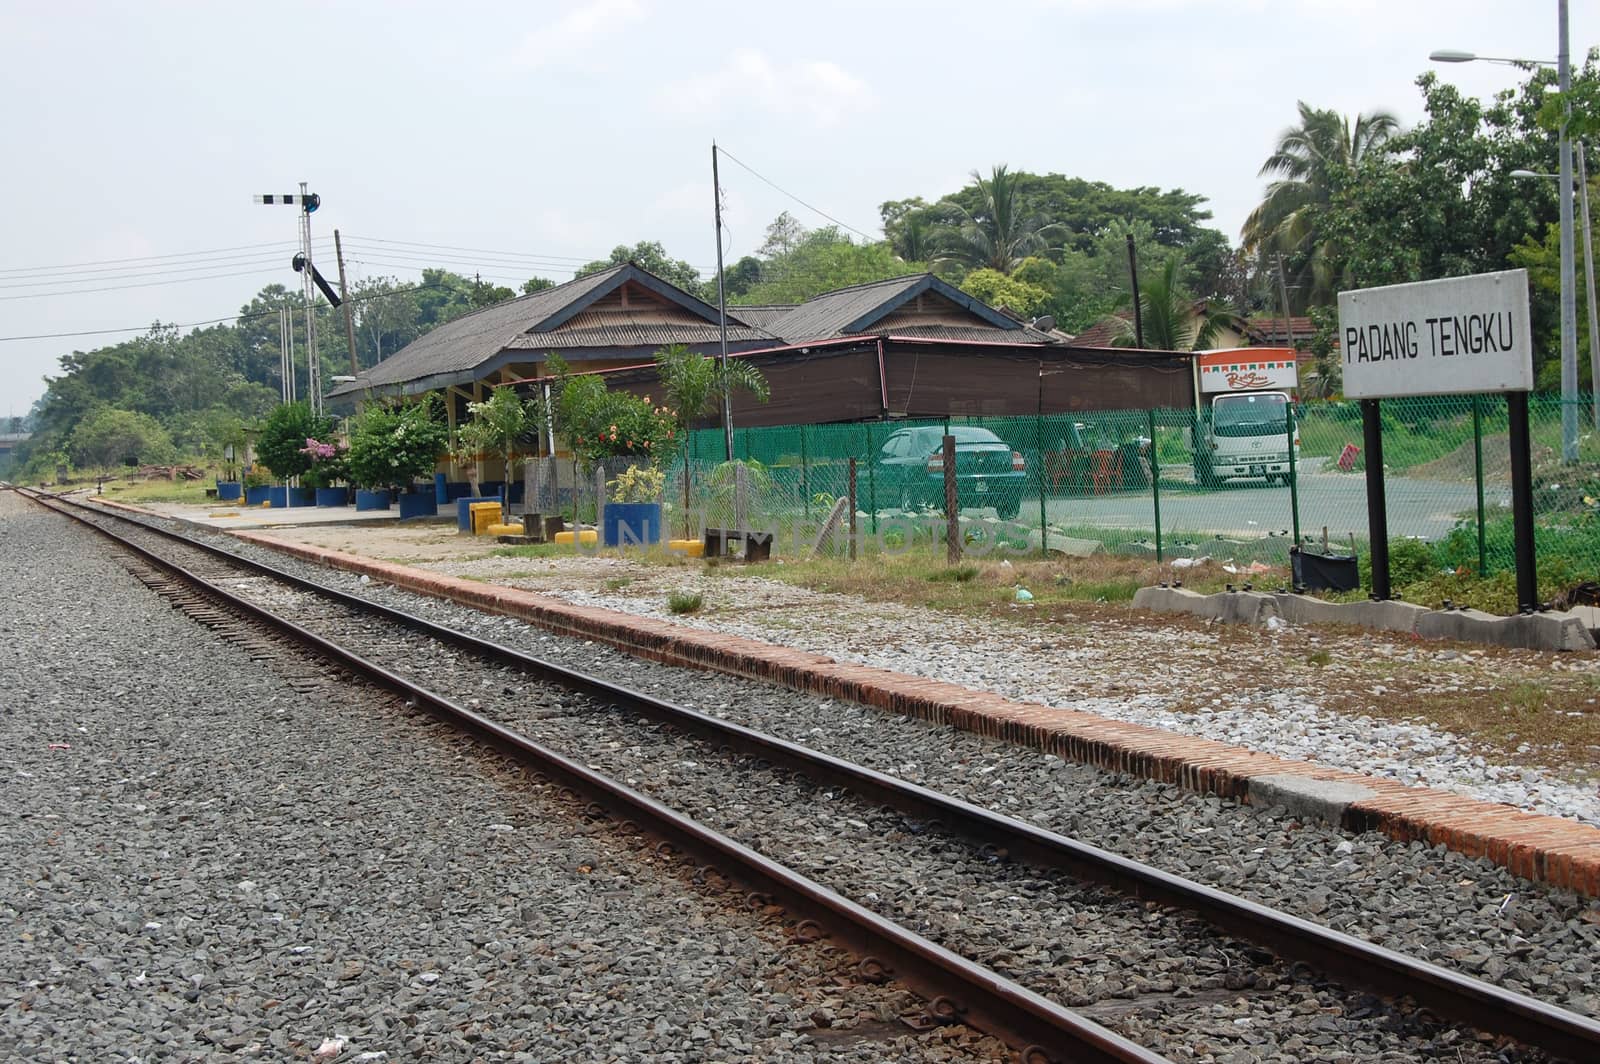 Railway platform at station in outback of Malaysia, Padang Tengku